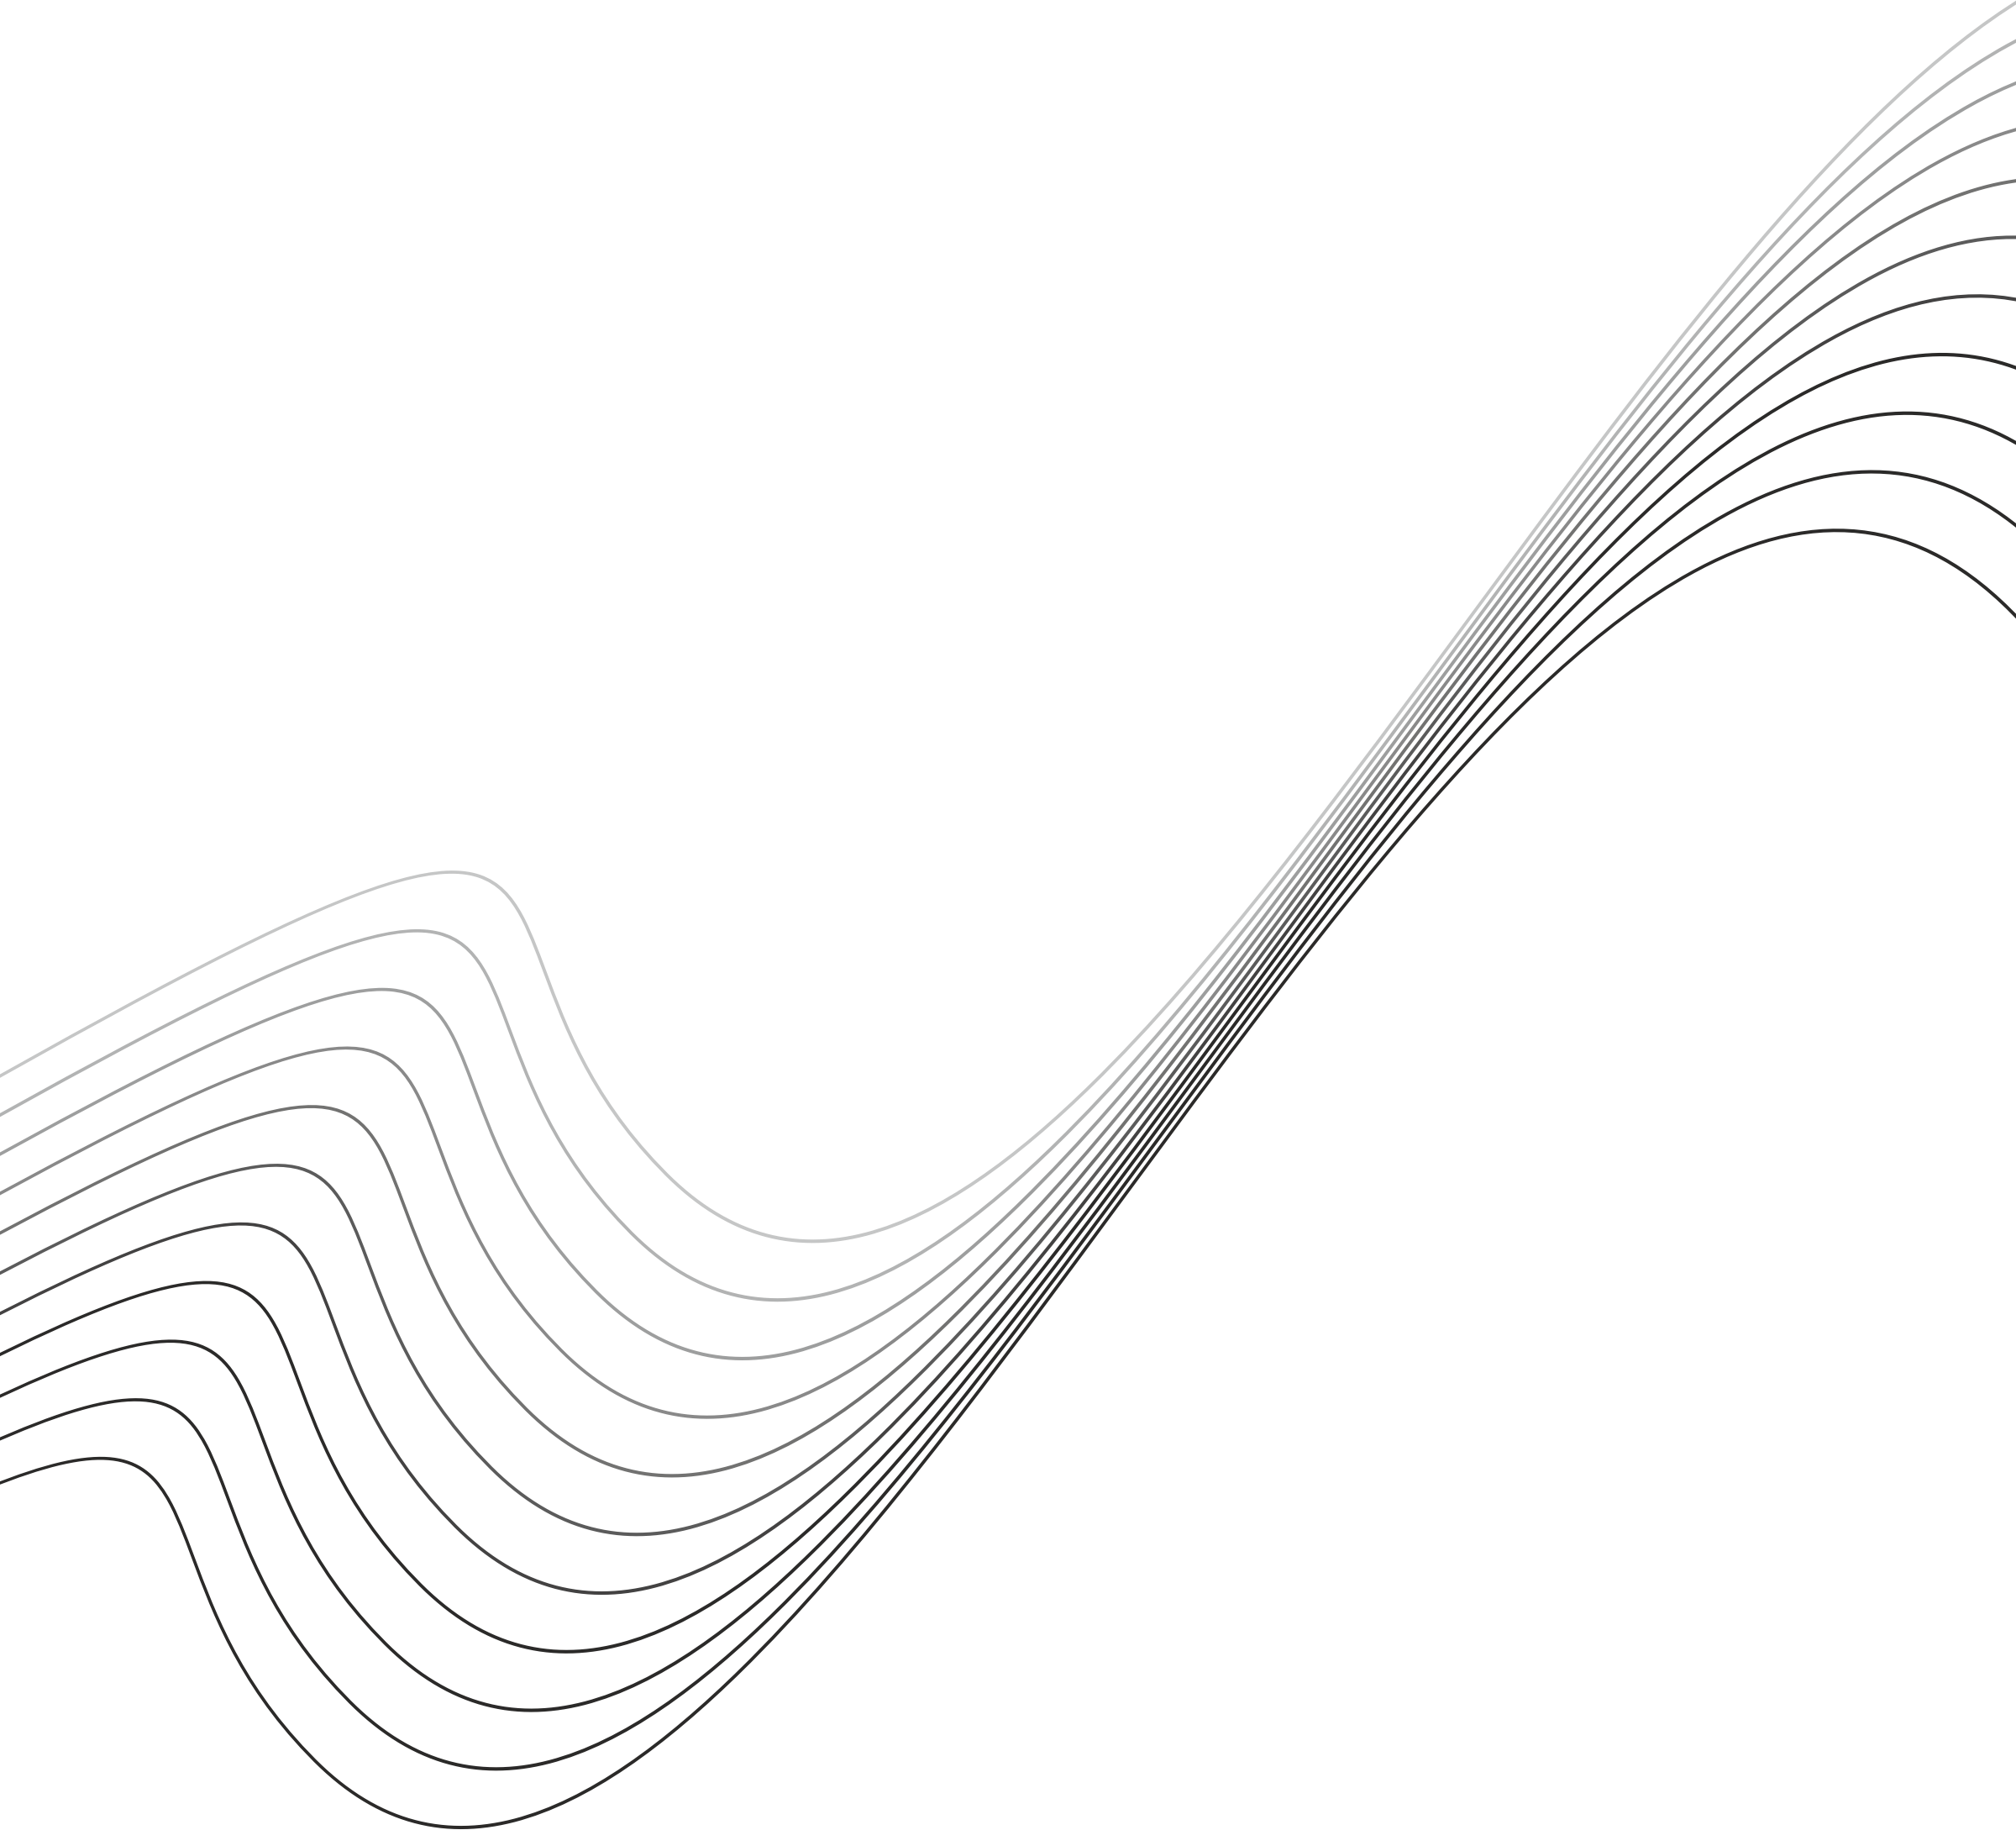 Lines clipart wave, Picture #1555355 lines clipart wave